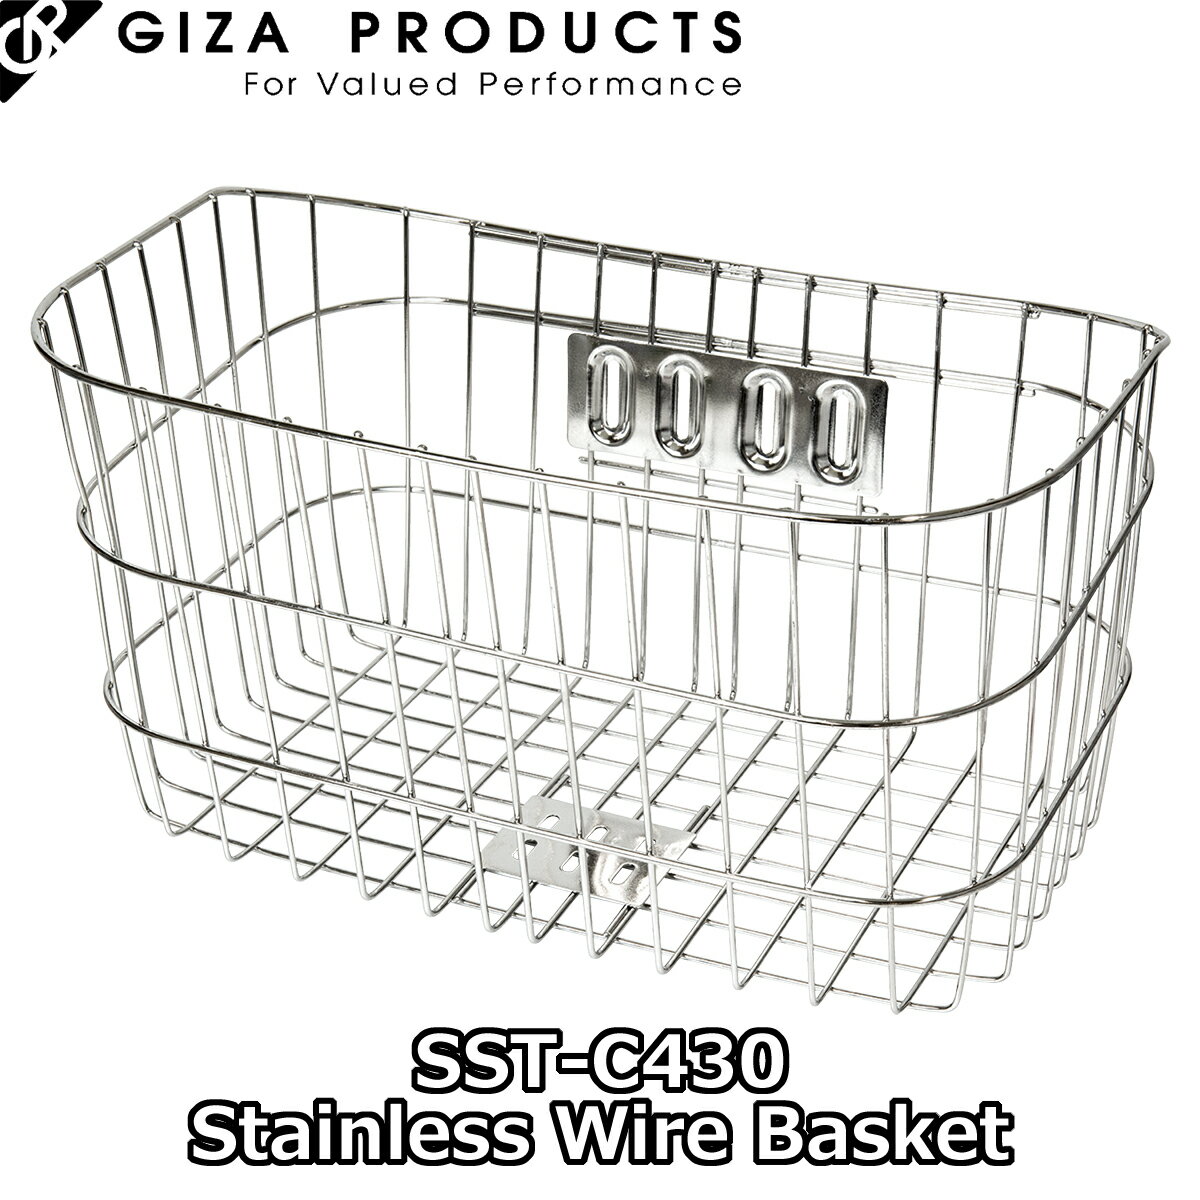 y6/1́u6{IvGg[Ń|CgUPzGIZA PRODUCTS SST-C430 Stainless Wire Basket MUv_Nc XeX C[ oXPbg